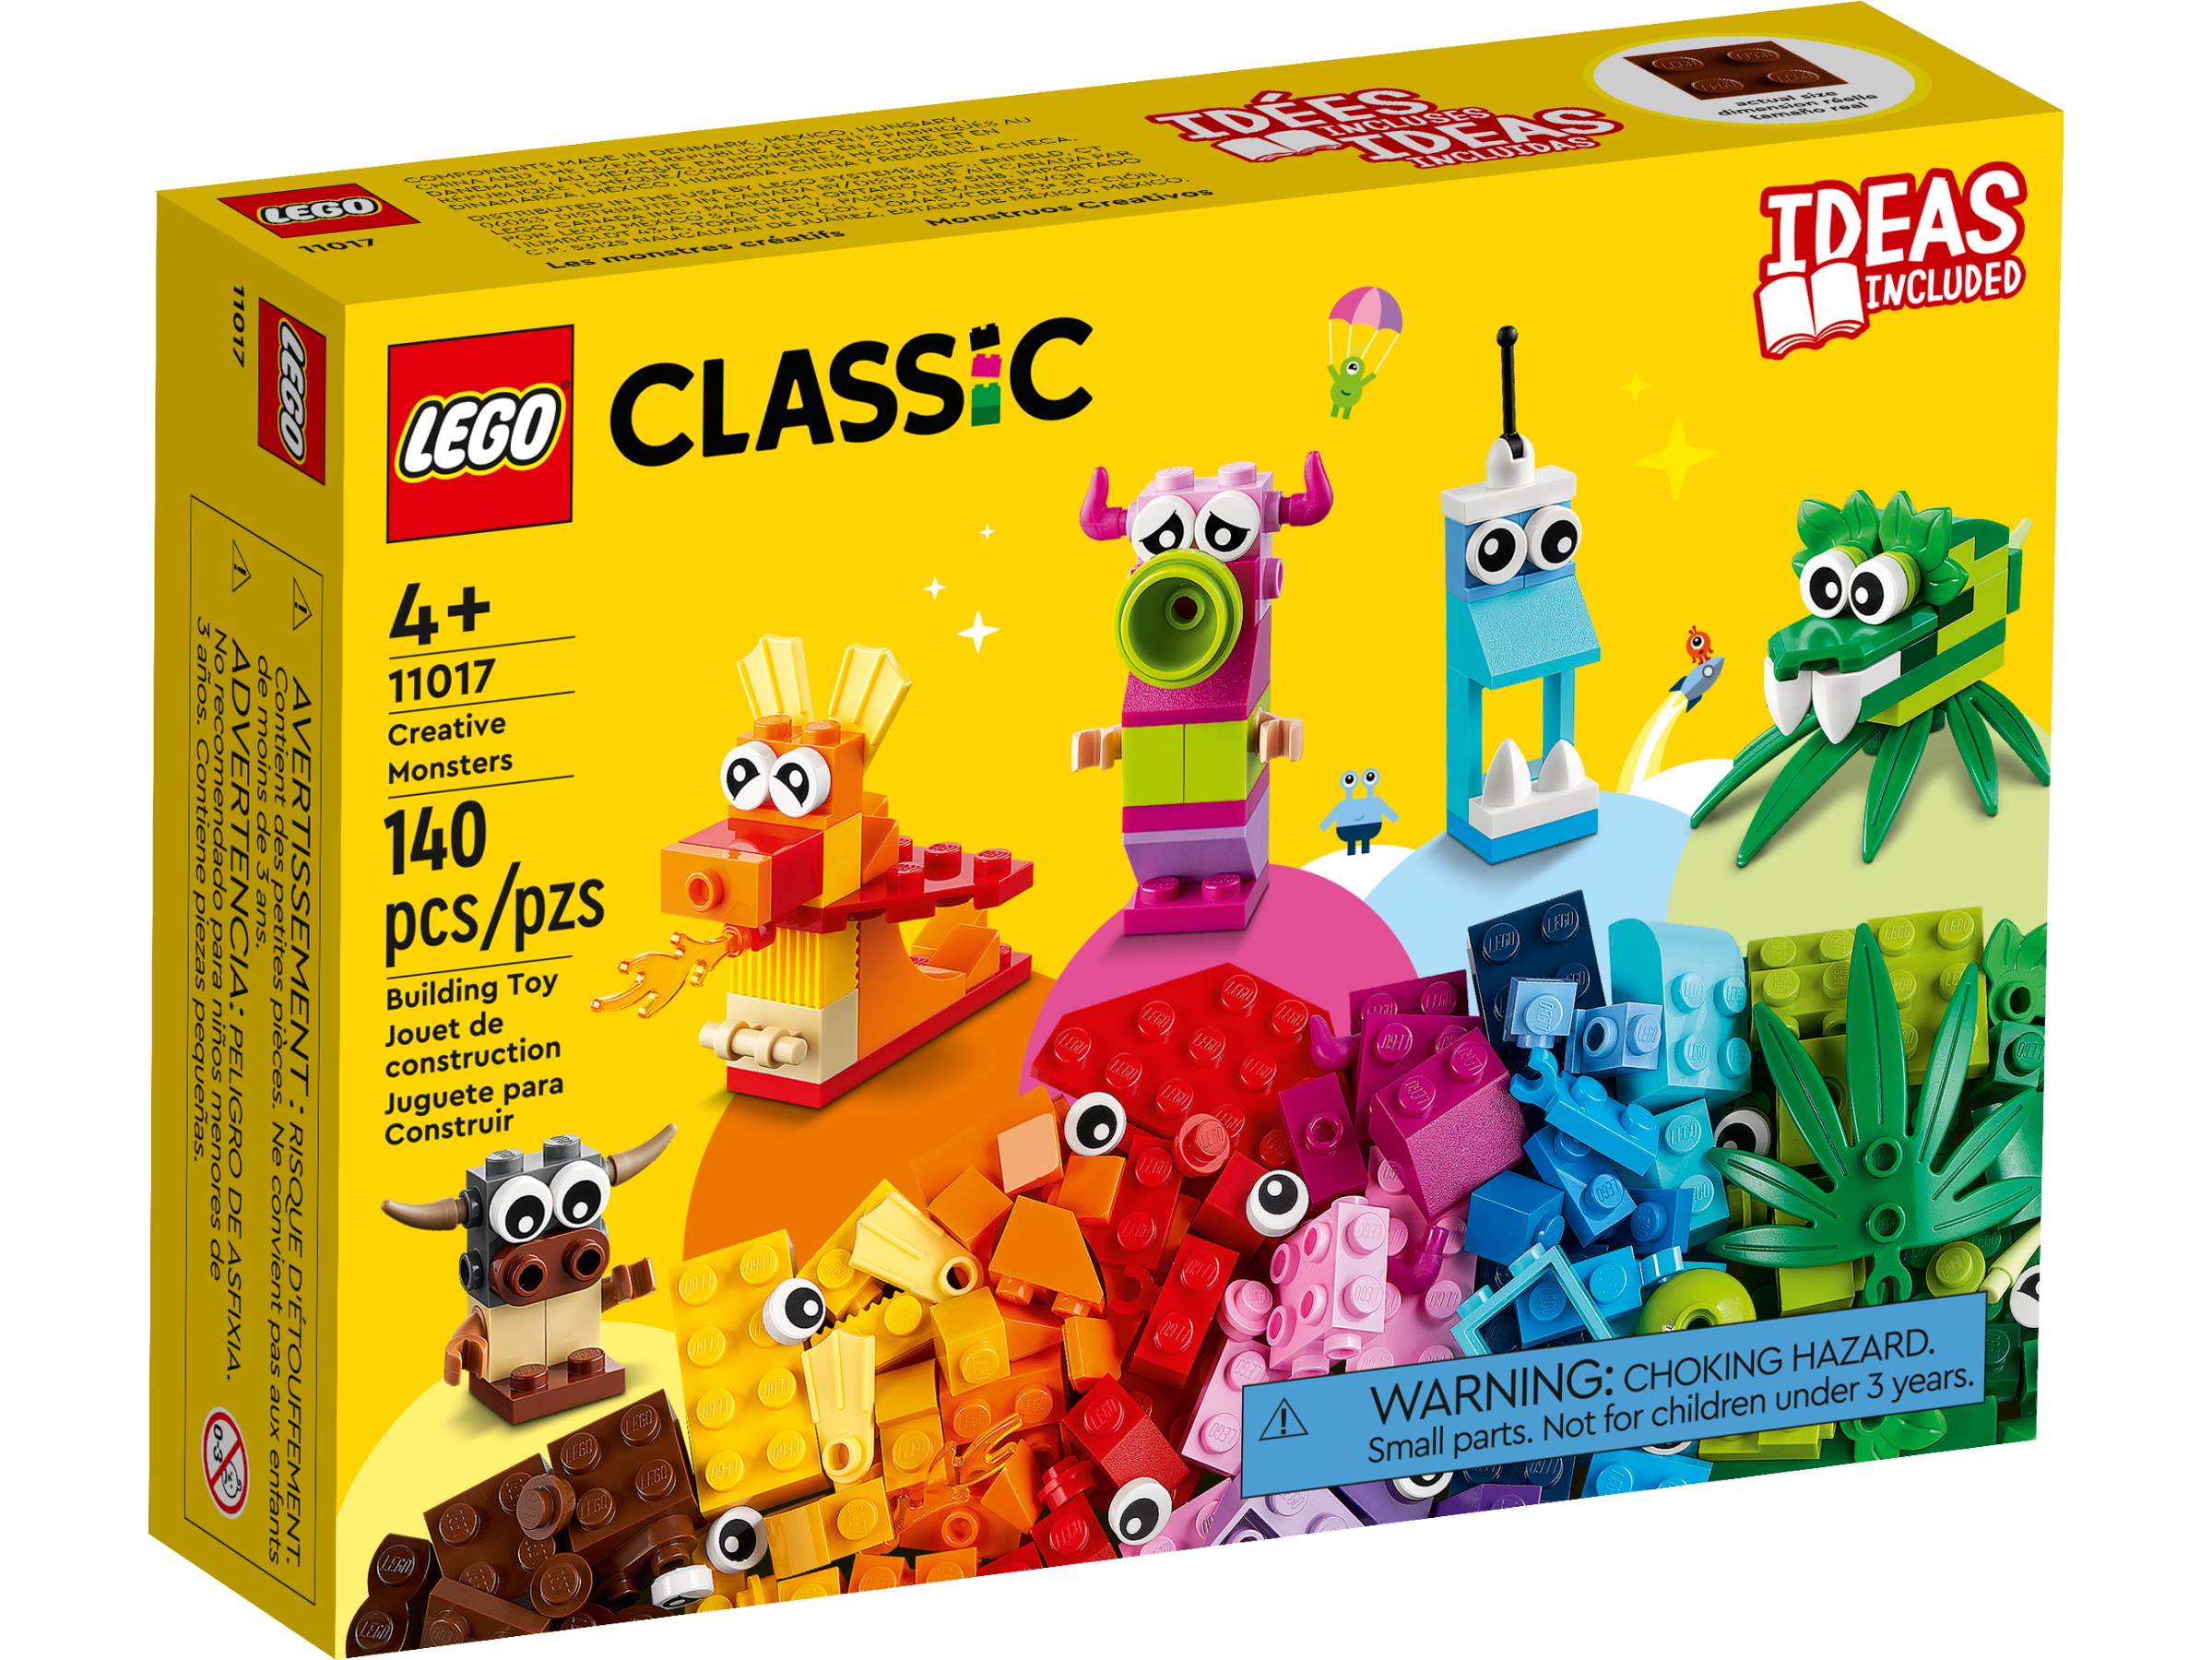 Конструктор Lego Classic 11017 Творческие монстры